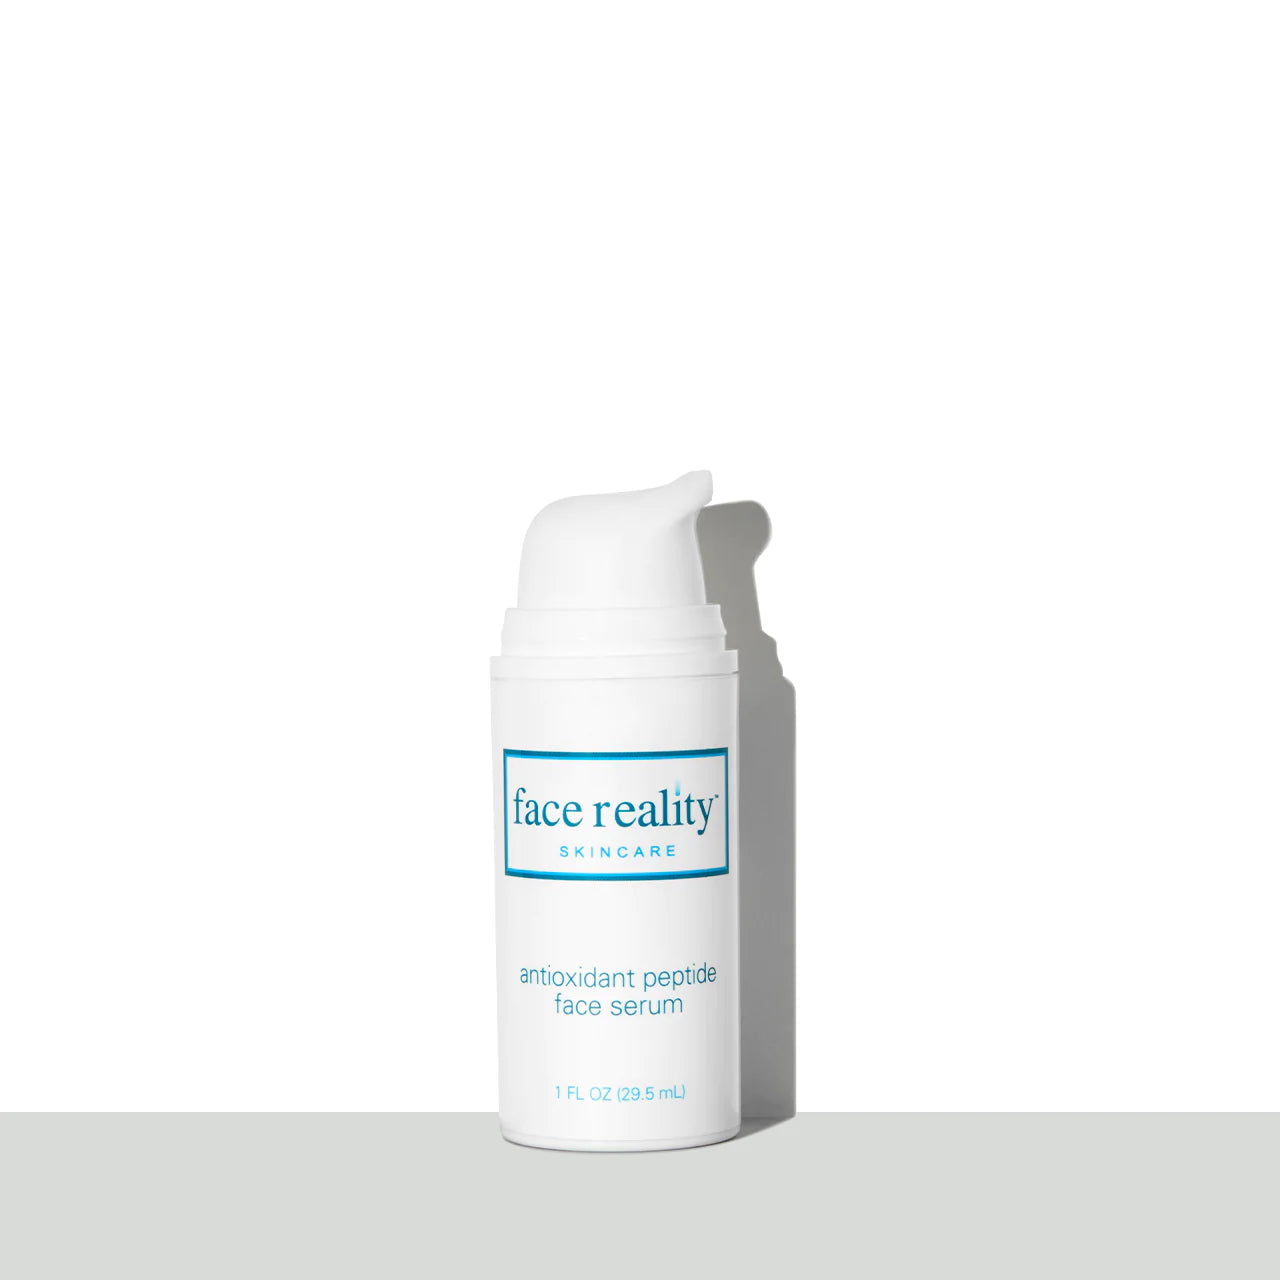 Face Reality Skincare Antioxidant Peptide Face Serum